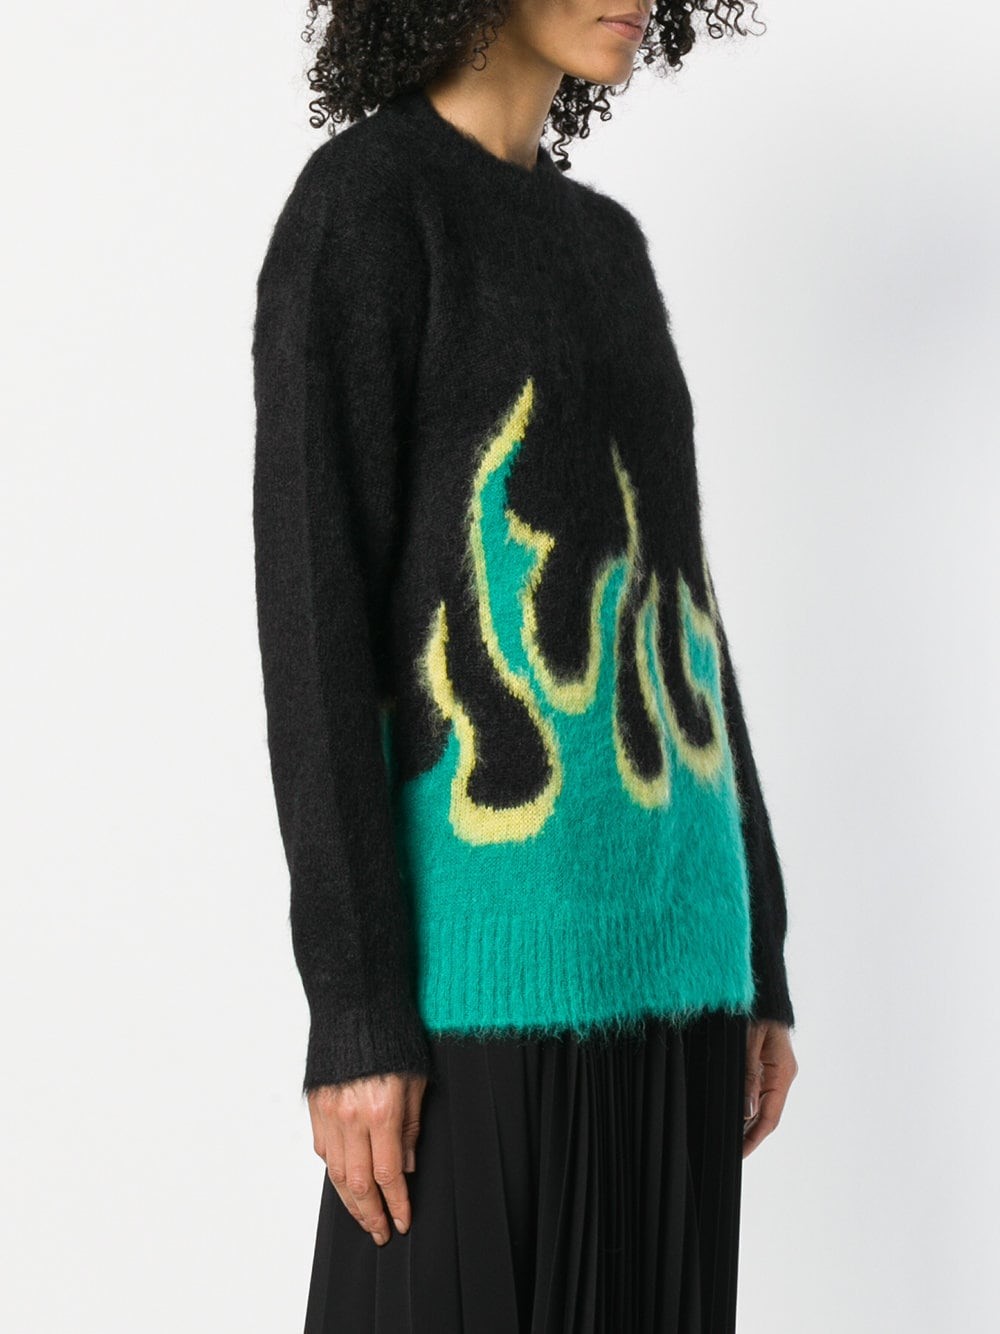 prada flame sweater